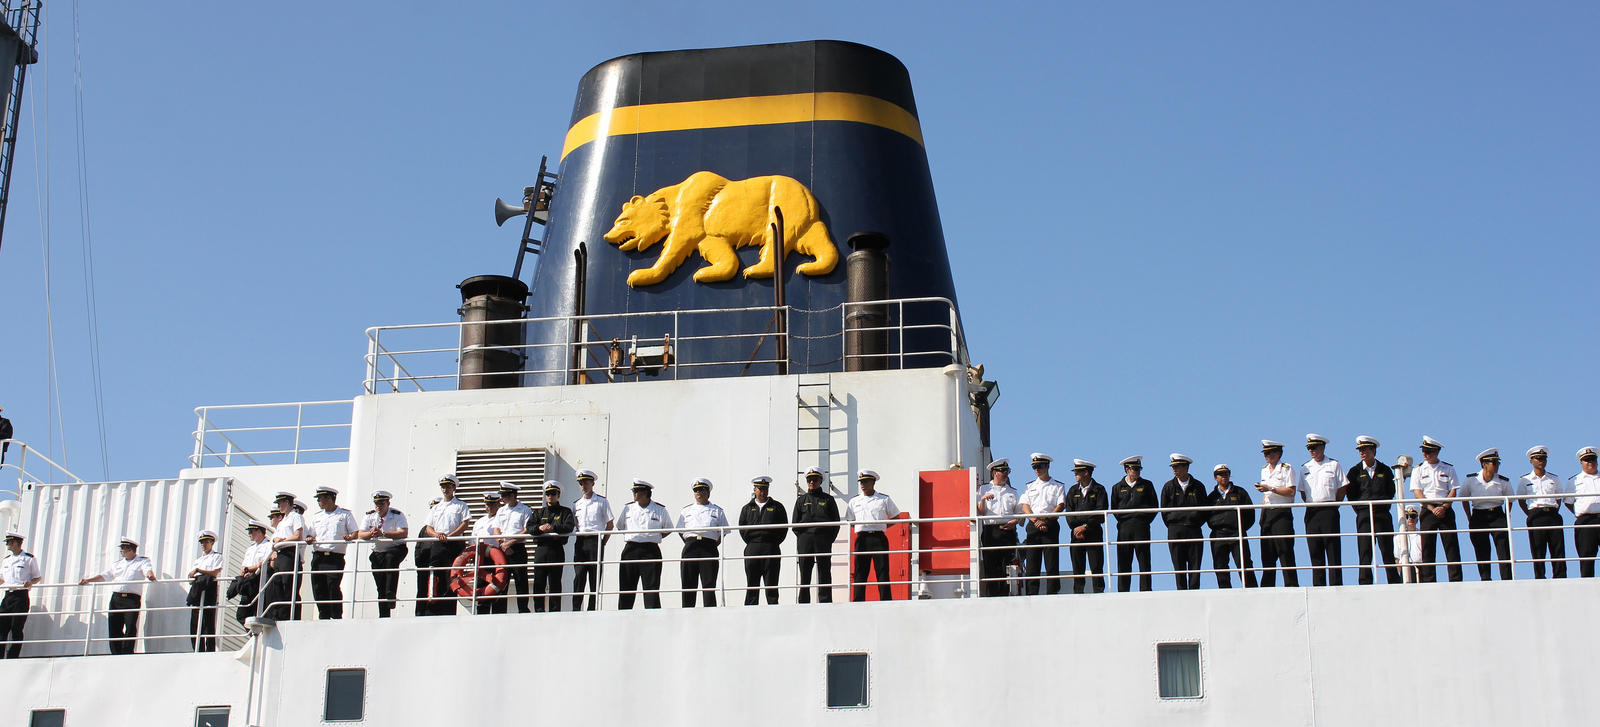 California Maritime Academy's Golden Bear